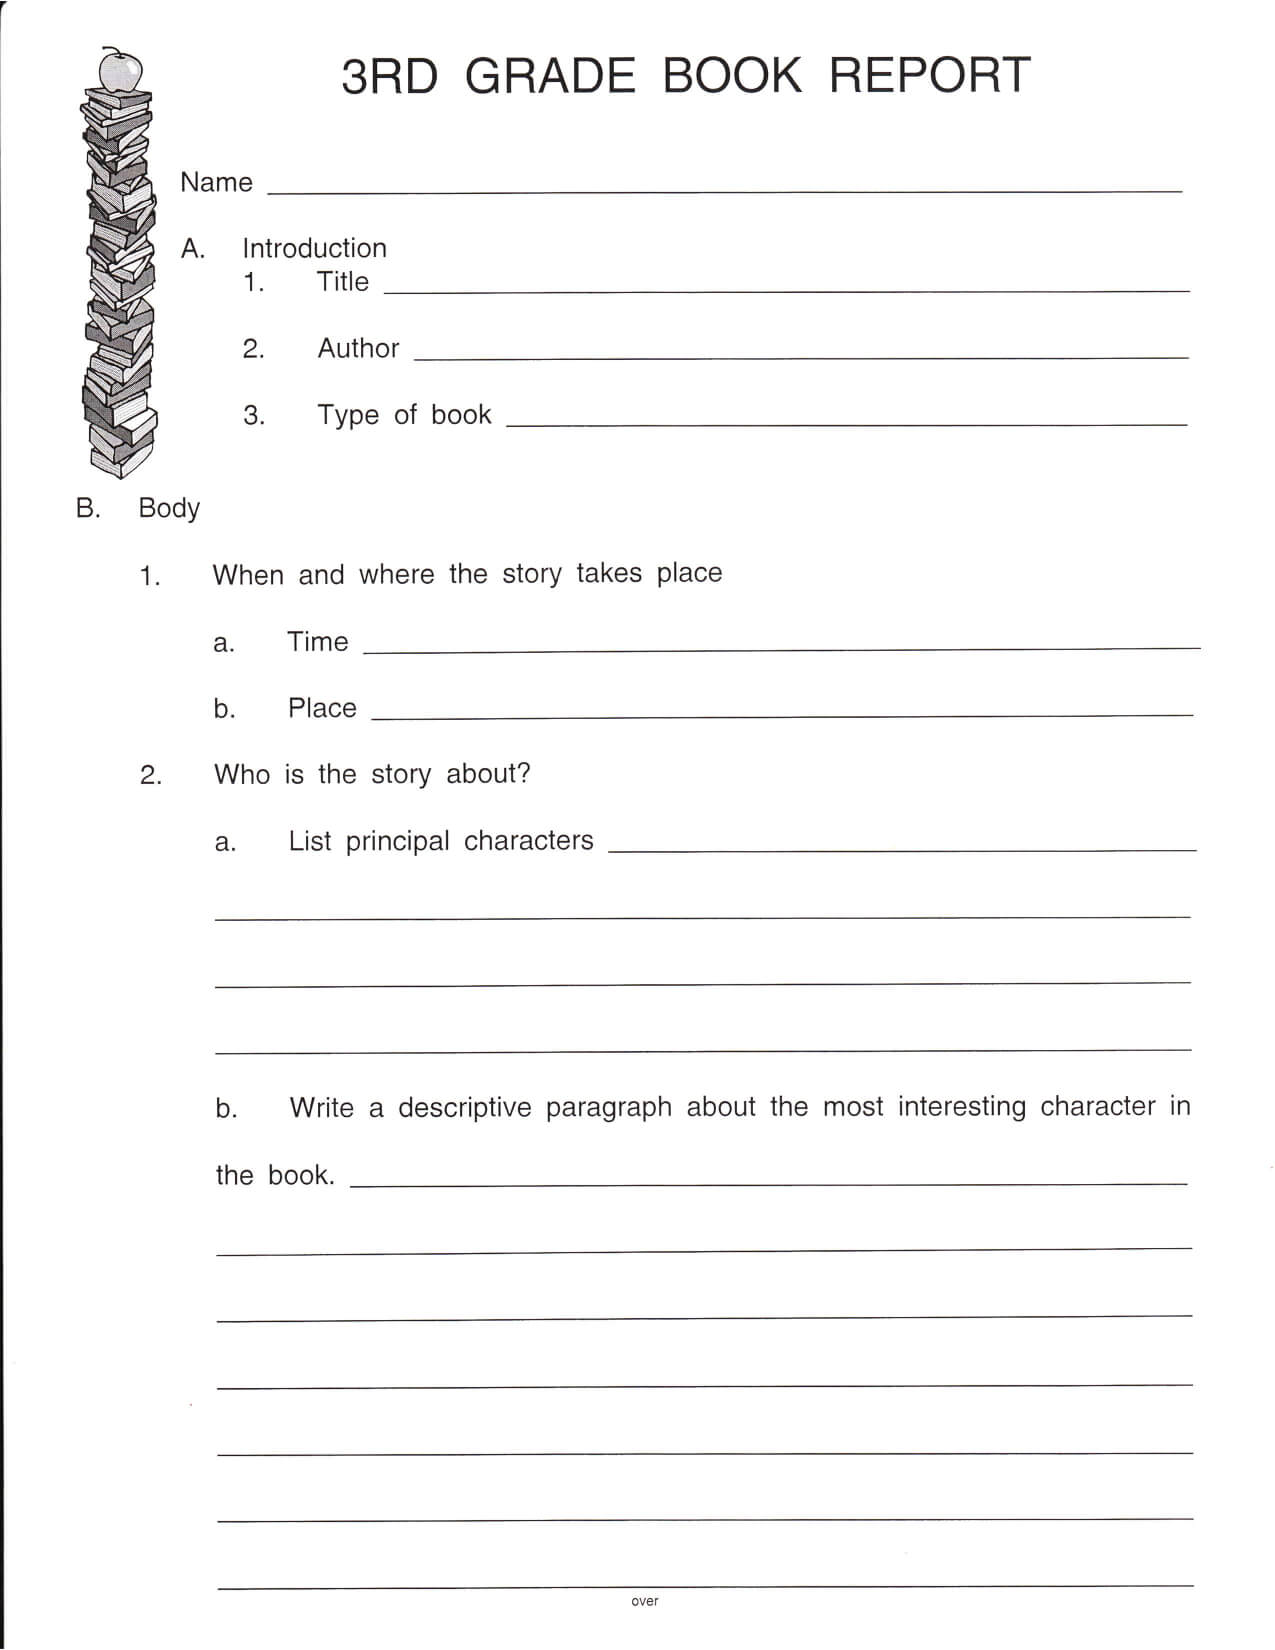 Pinshelena Schweitzer On Classroom Reading | Book Report With Regard To Book Report Template Grade 1